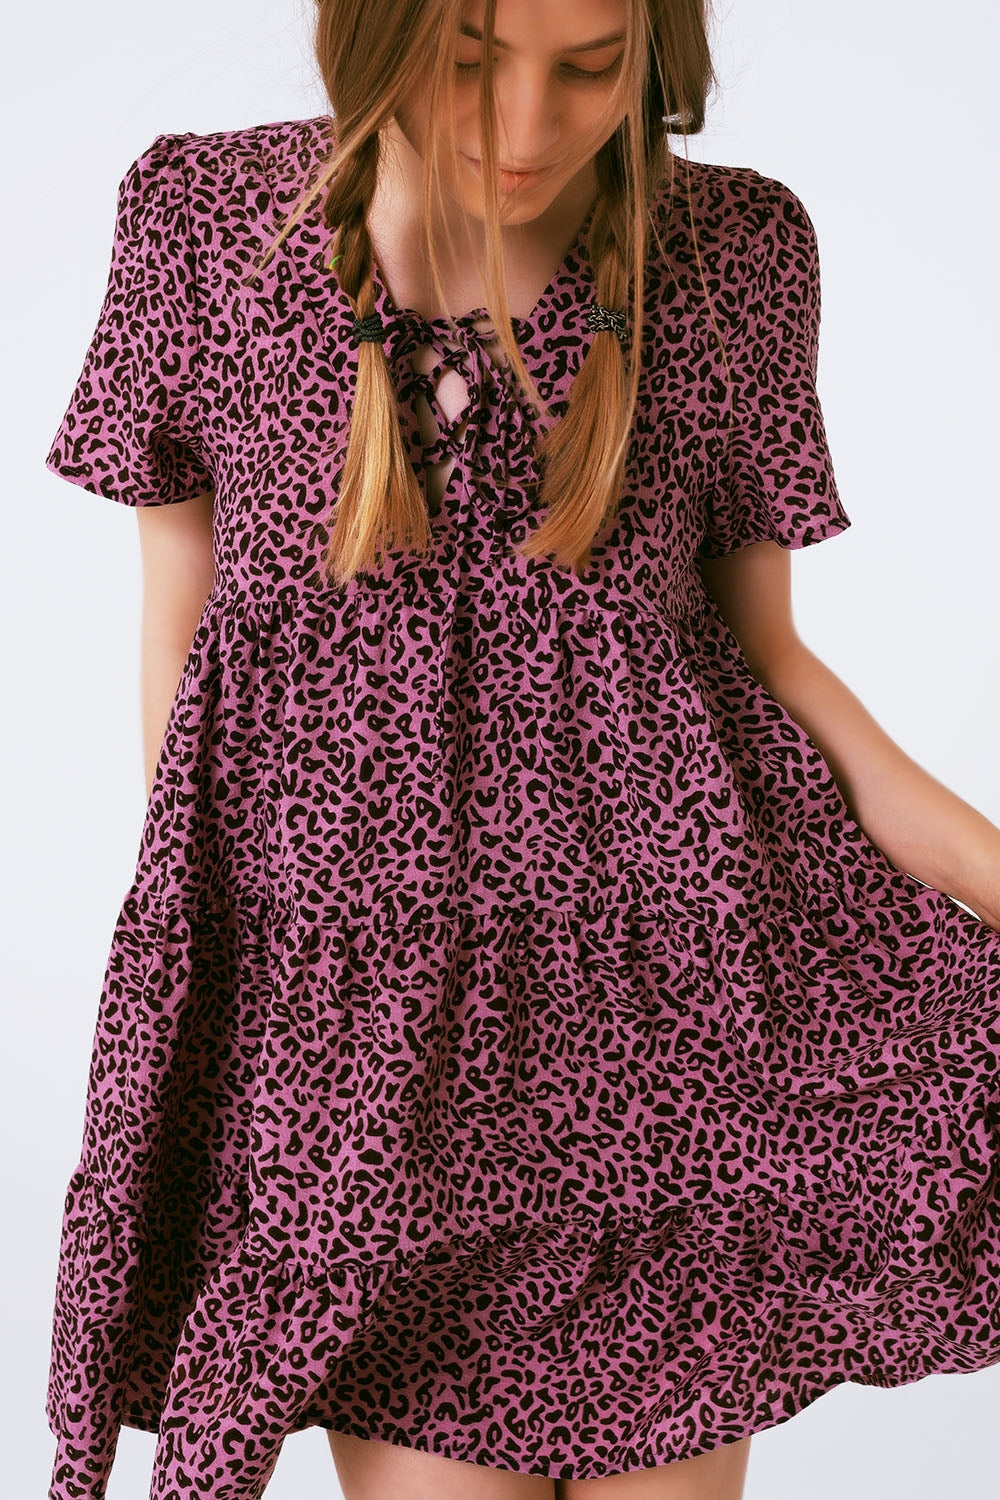 Short Sleeve Baby Doll Dress With Neck Detail in Purple Leopard Print - Szua Store